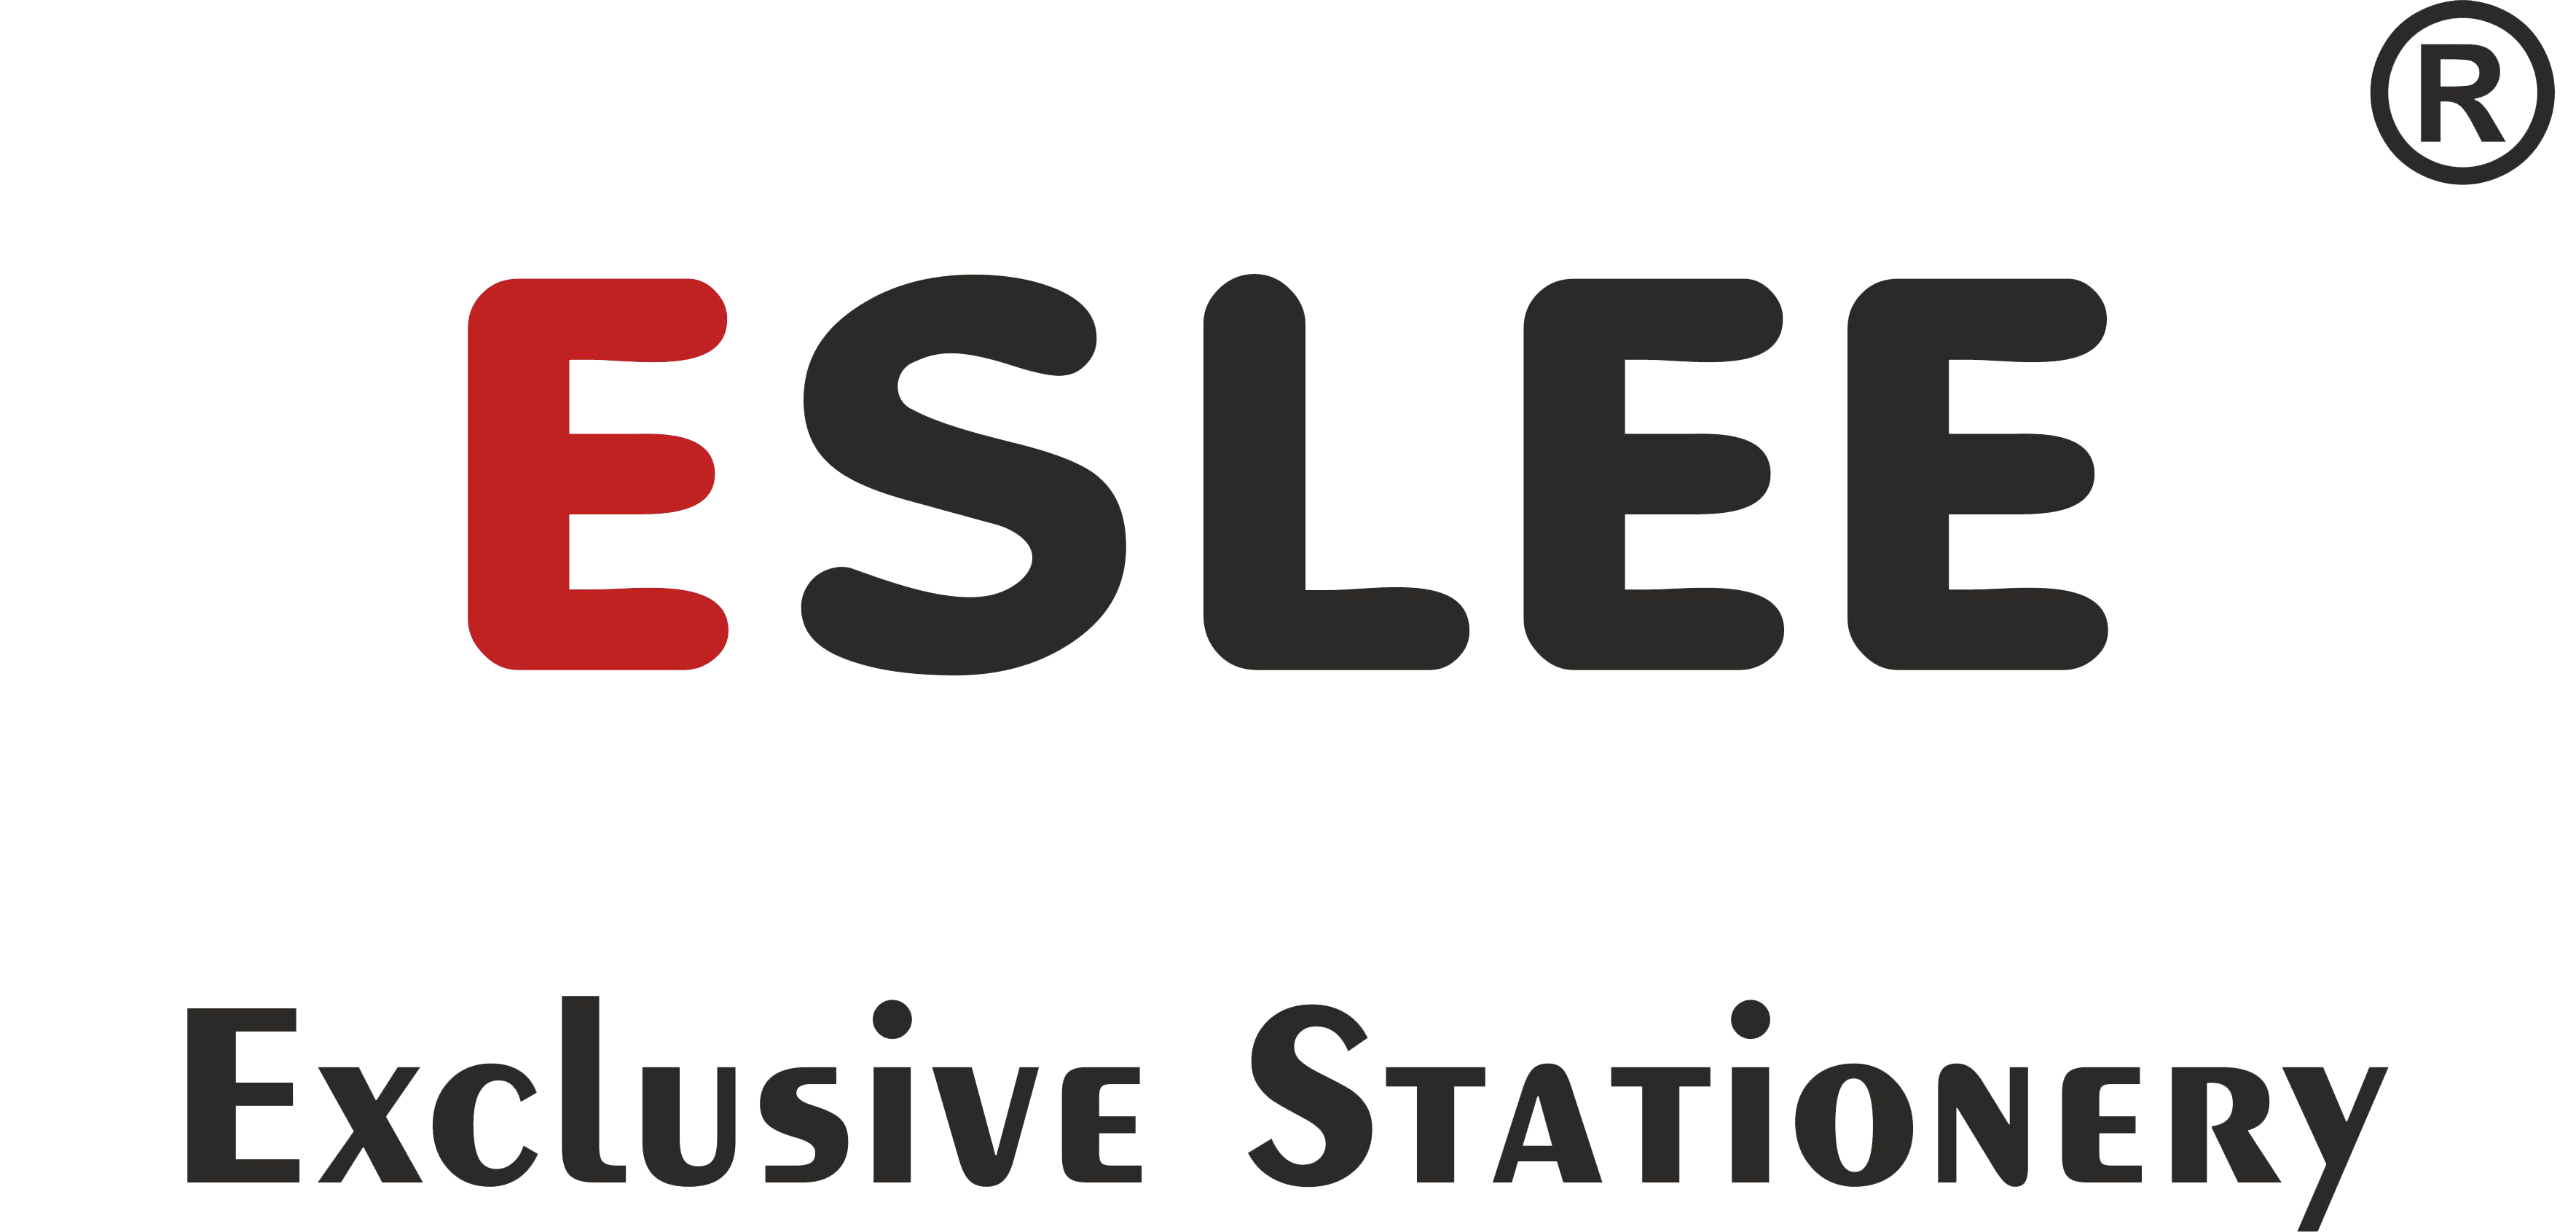 New Eslee Logo